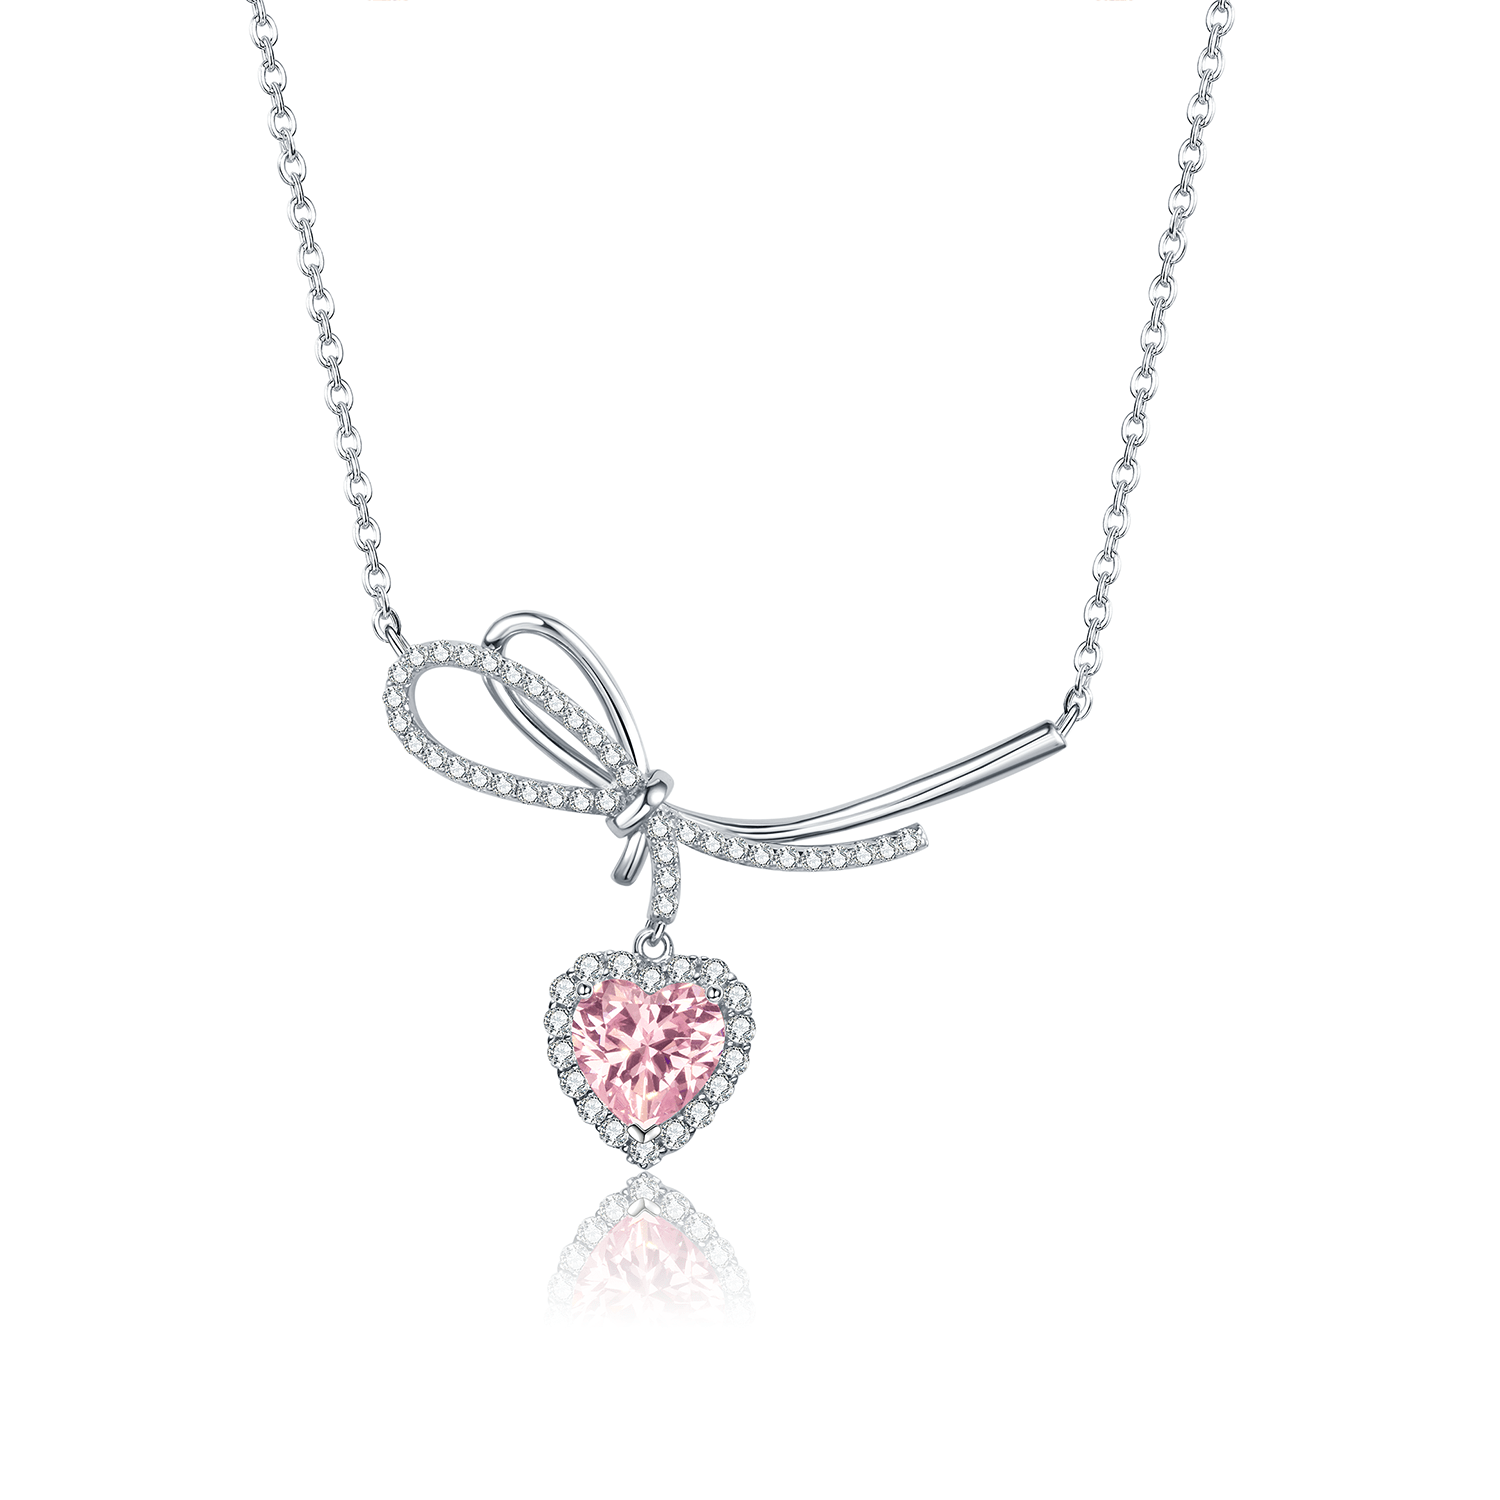 Handmade Sterling Silver Swarovski Crystal Rose AB Heart 6228 Necklace; Pink  | eBay